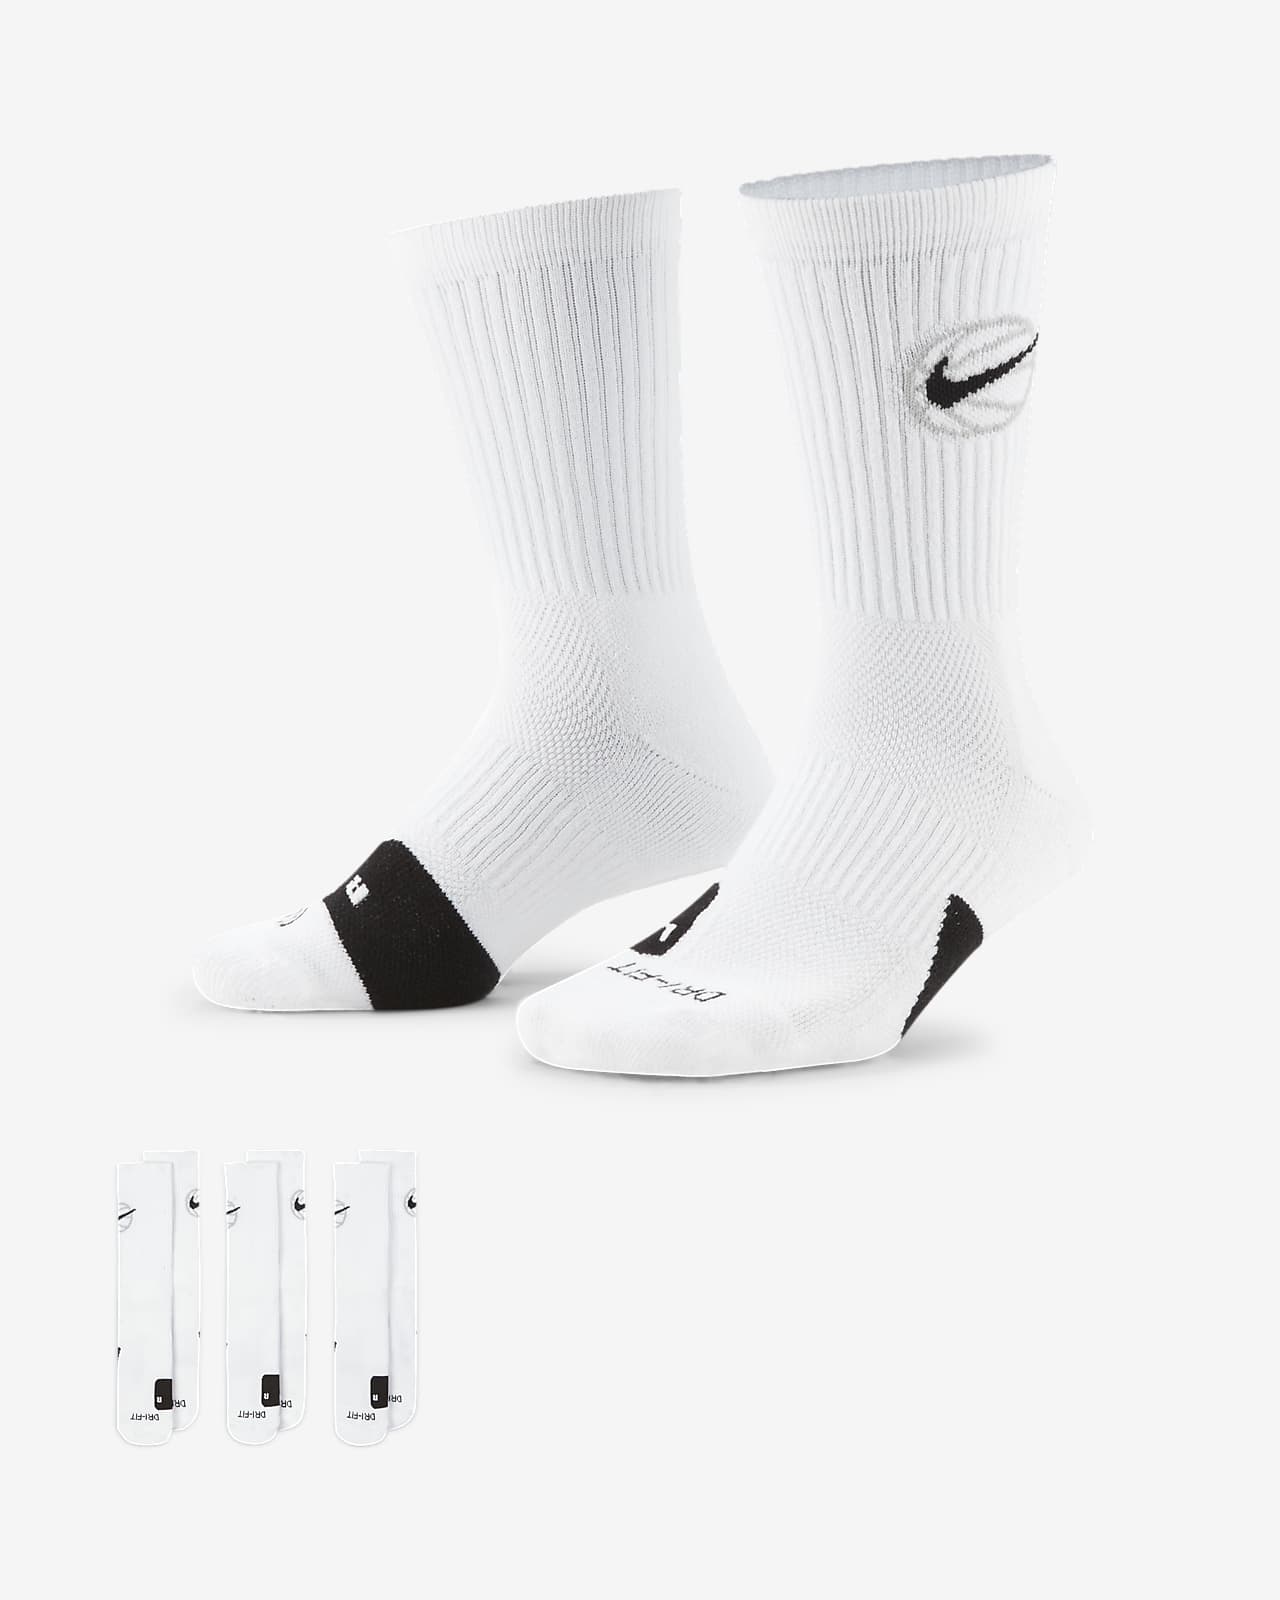 Nike Everyday Crew Basketball Socks (3 Pair)